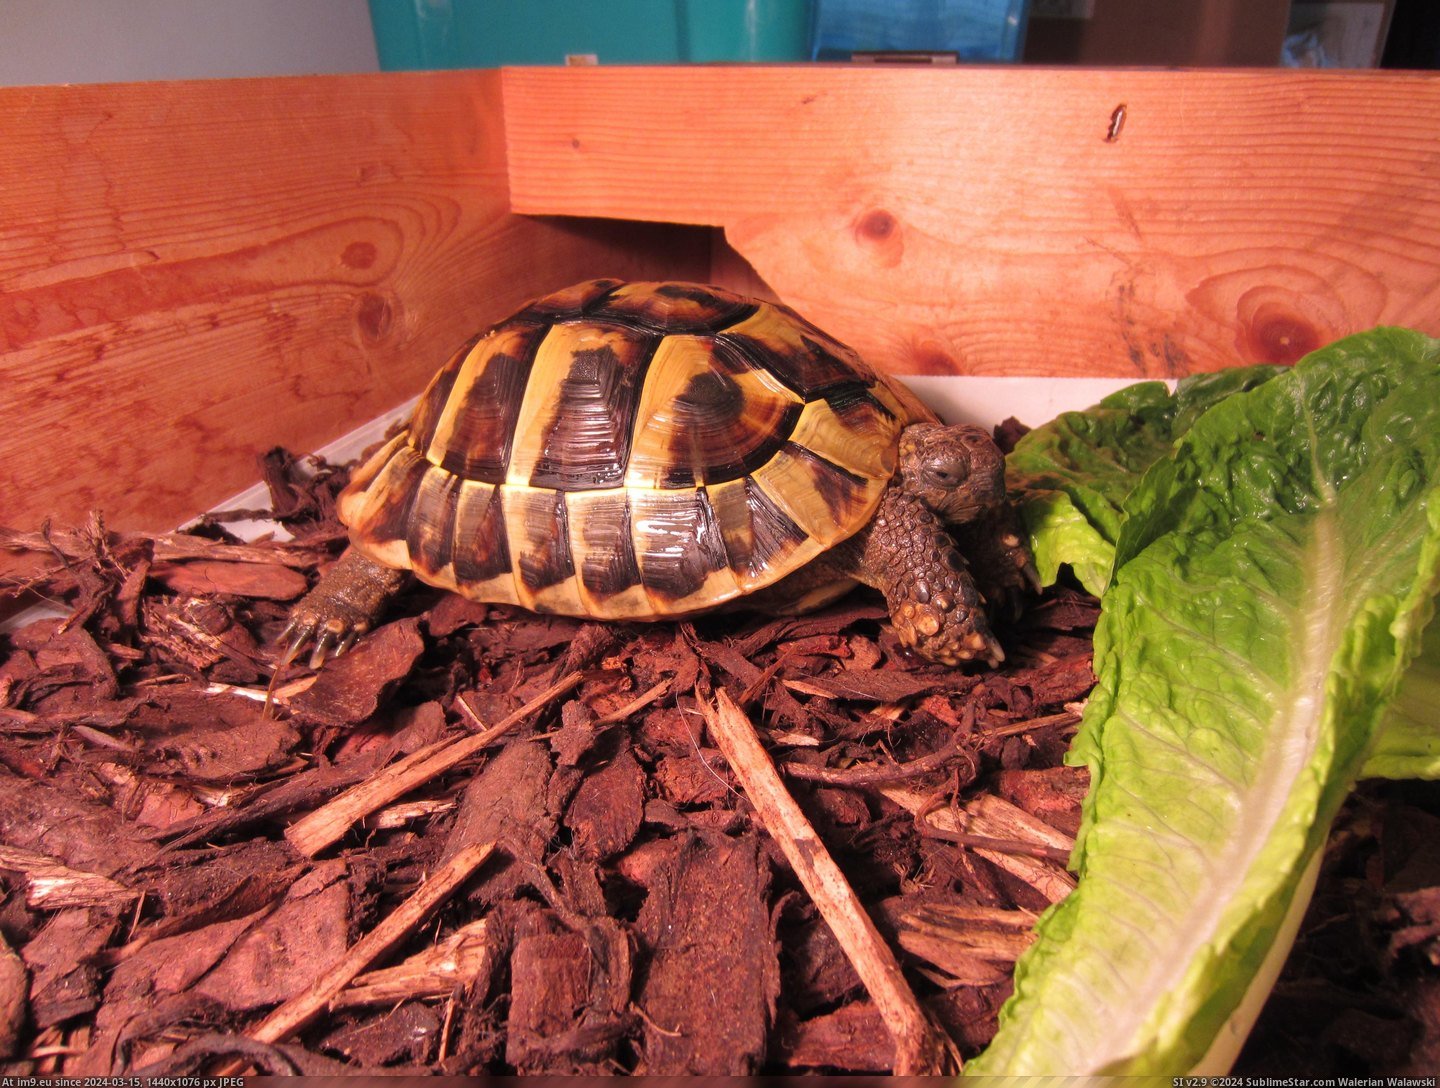 #May #Woke #Tortoise #Hibernating #Charlie #Fridge [Pics] You may remember Charlie the tortoise hibernating in the fridge? Well, today he woke up.. 8 Pic. (Изображение из альбом My r/PICS favs))